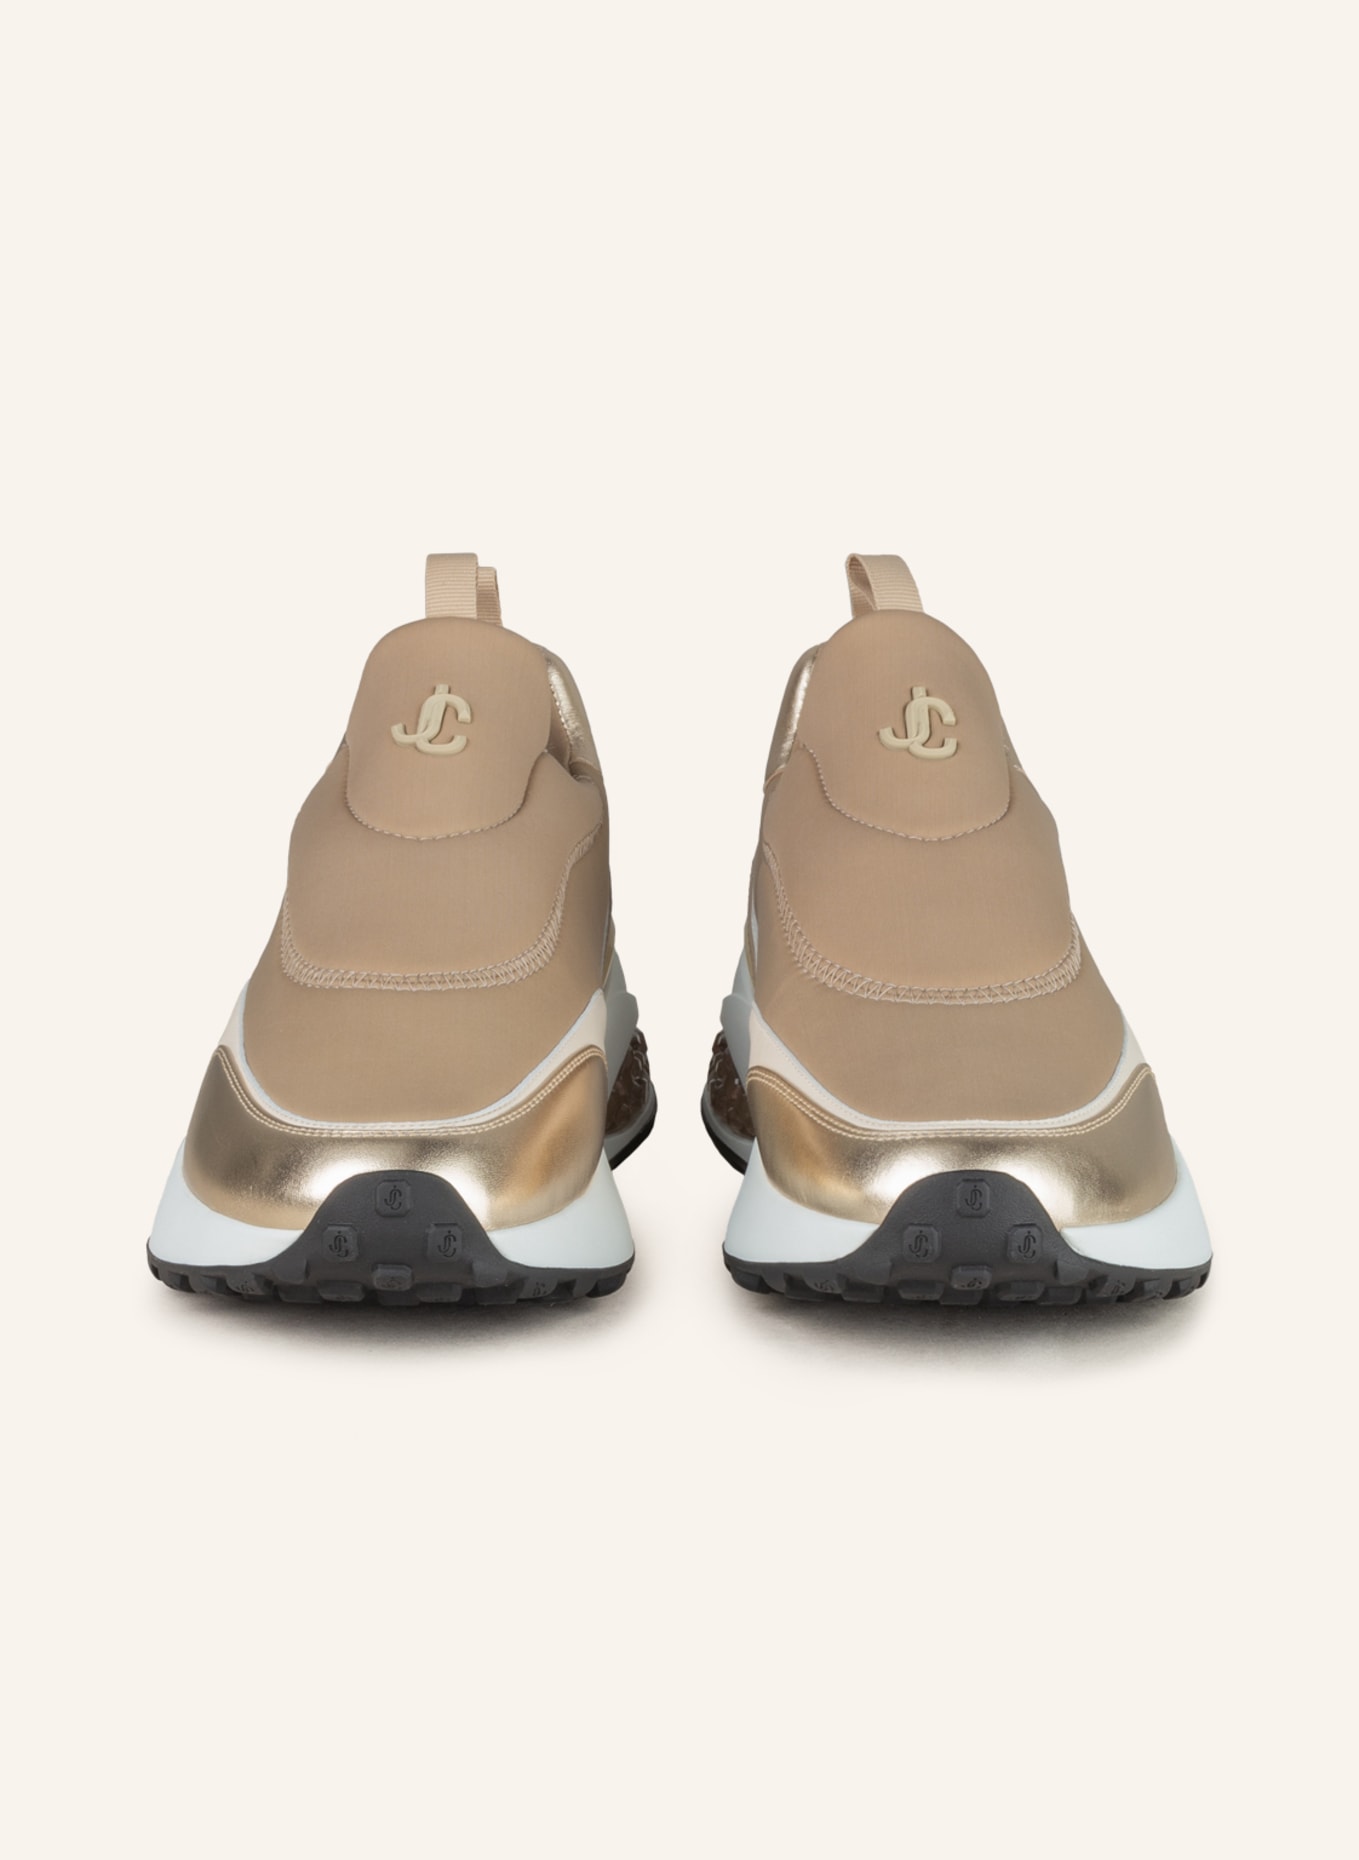 JIMMY CHOO Sneakers MEMPHIS in light brown/ gold